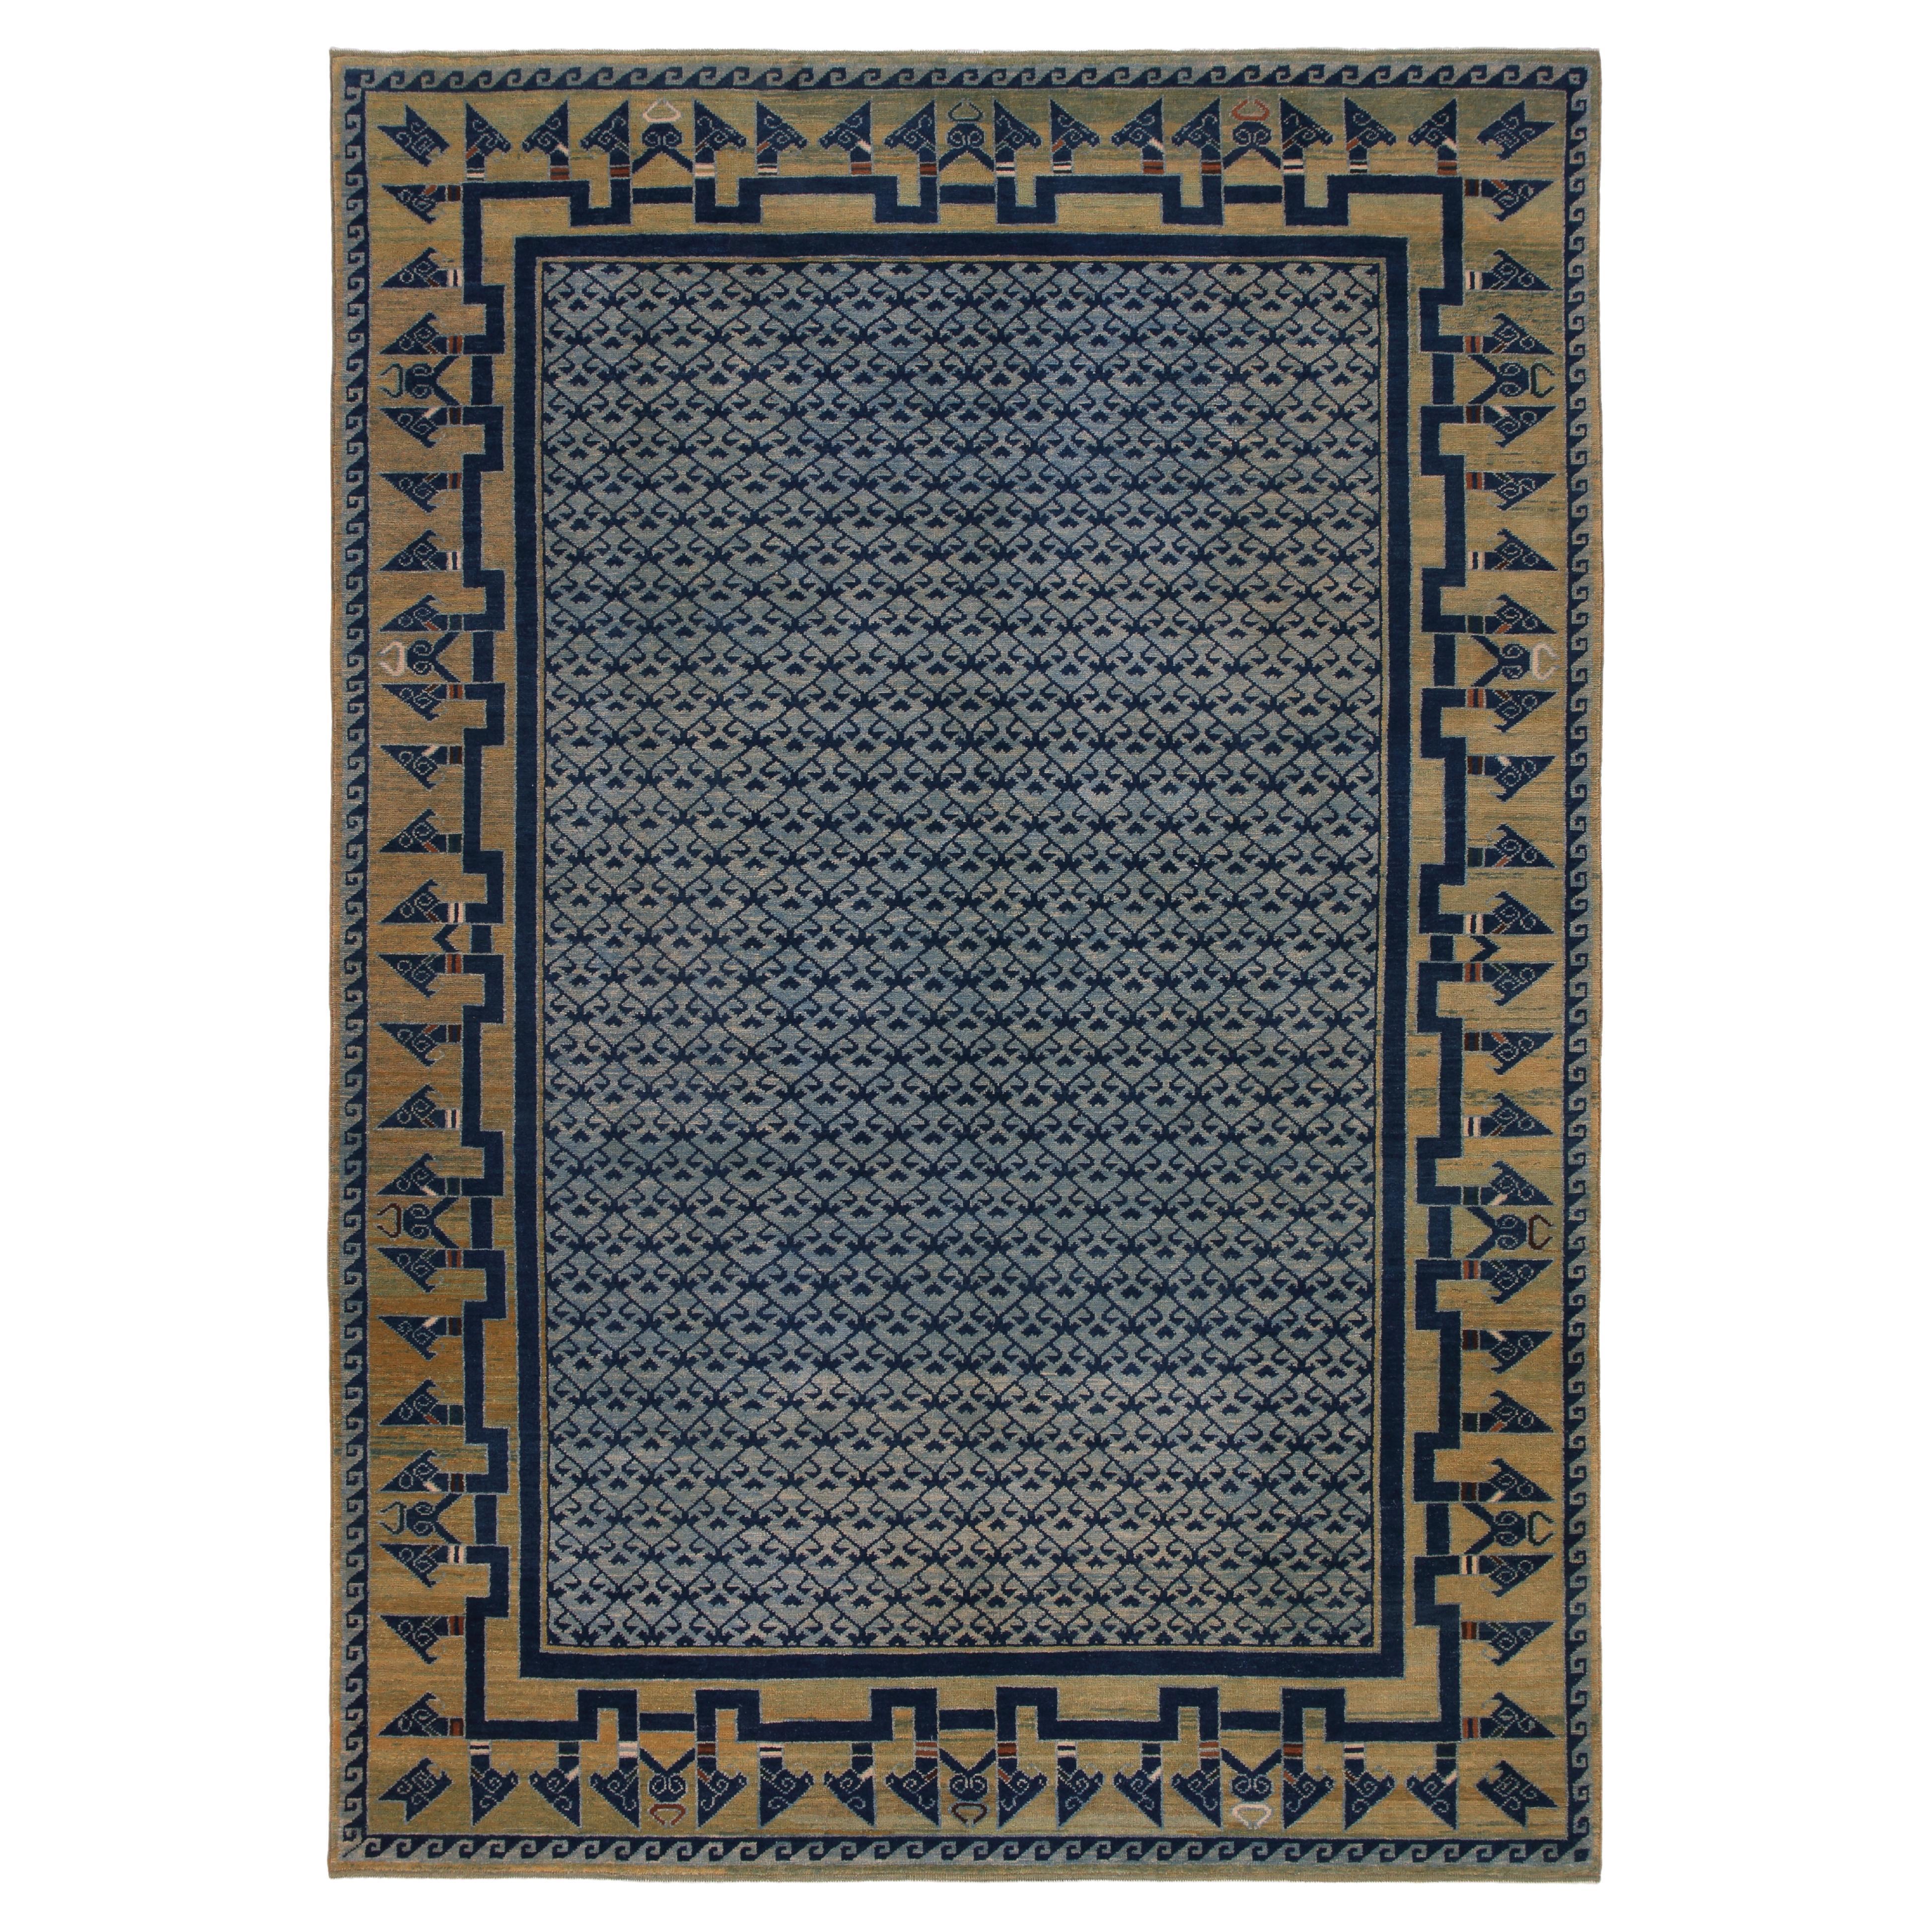 Ararat Rugs the Alaeddin Mosque Diamond Lattice Carpet Seljuk Rug, Natural Dyed For Sale